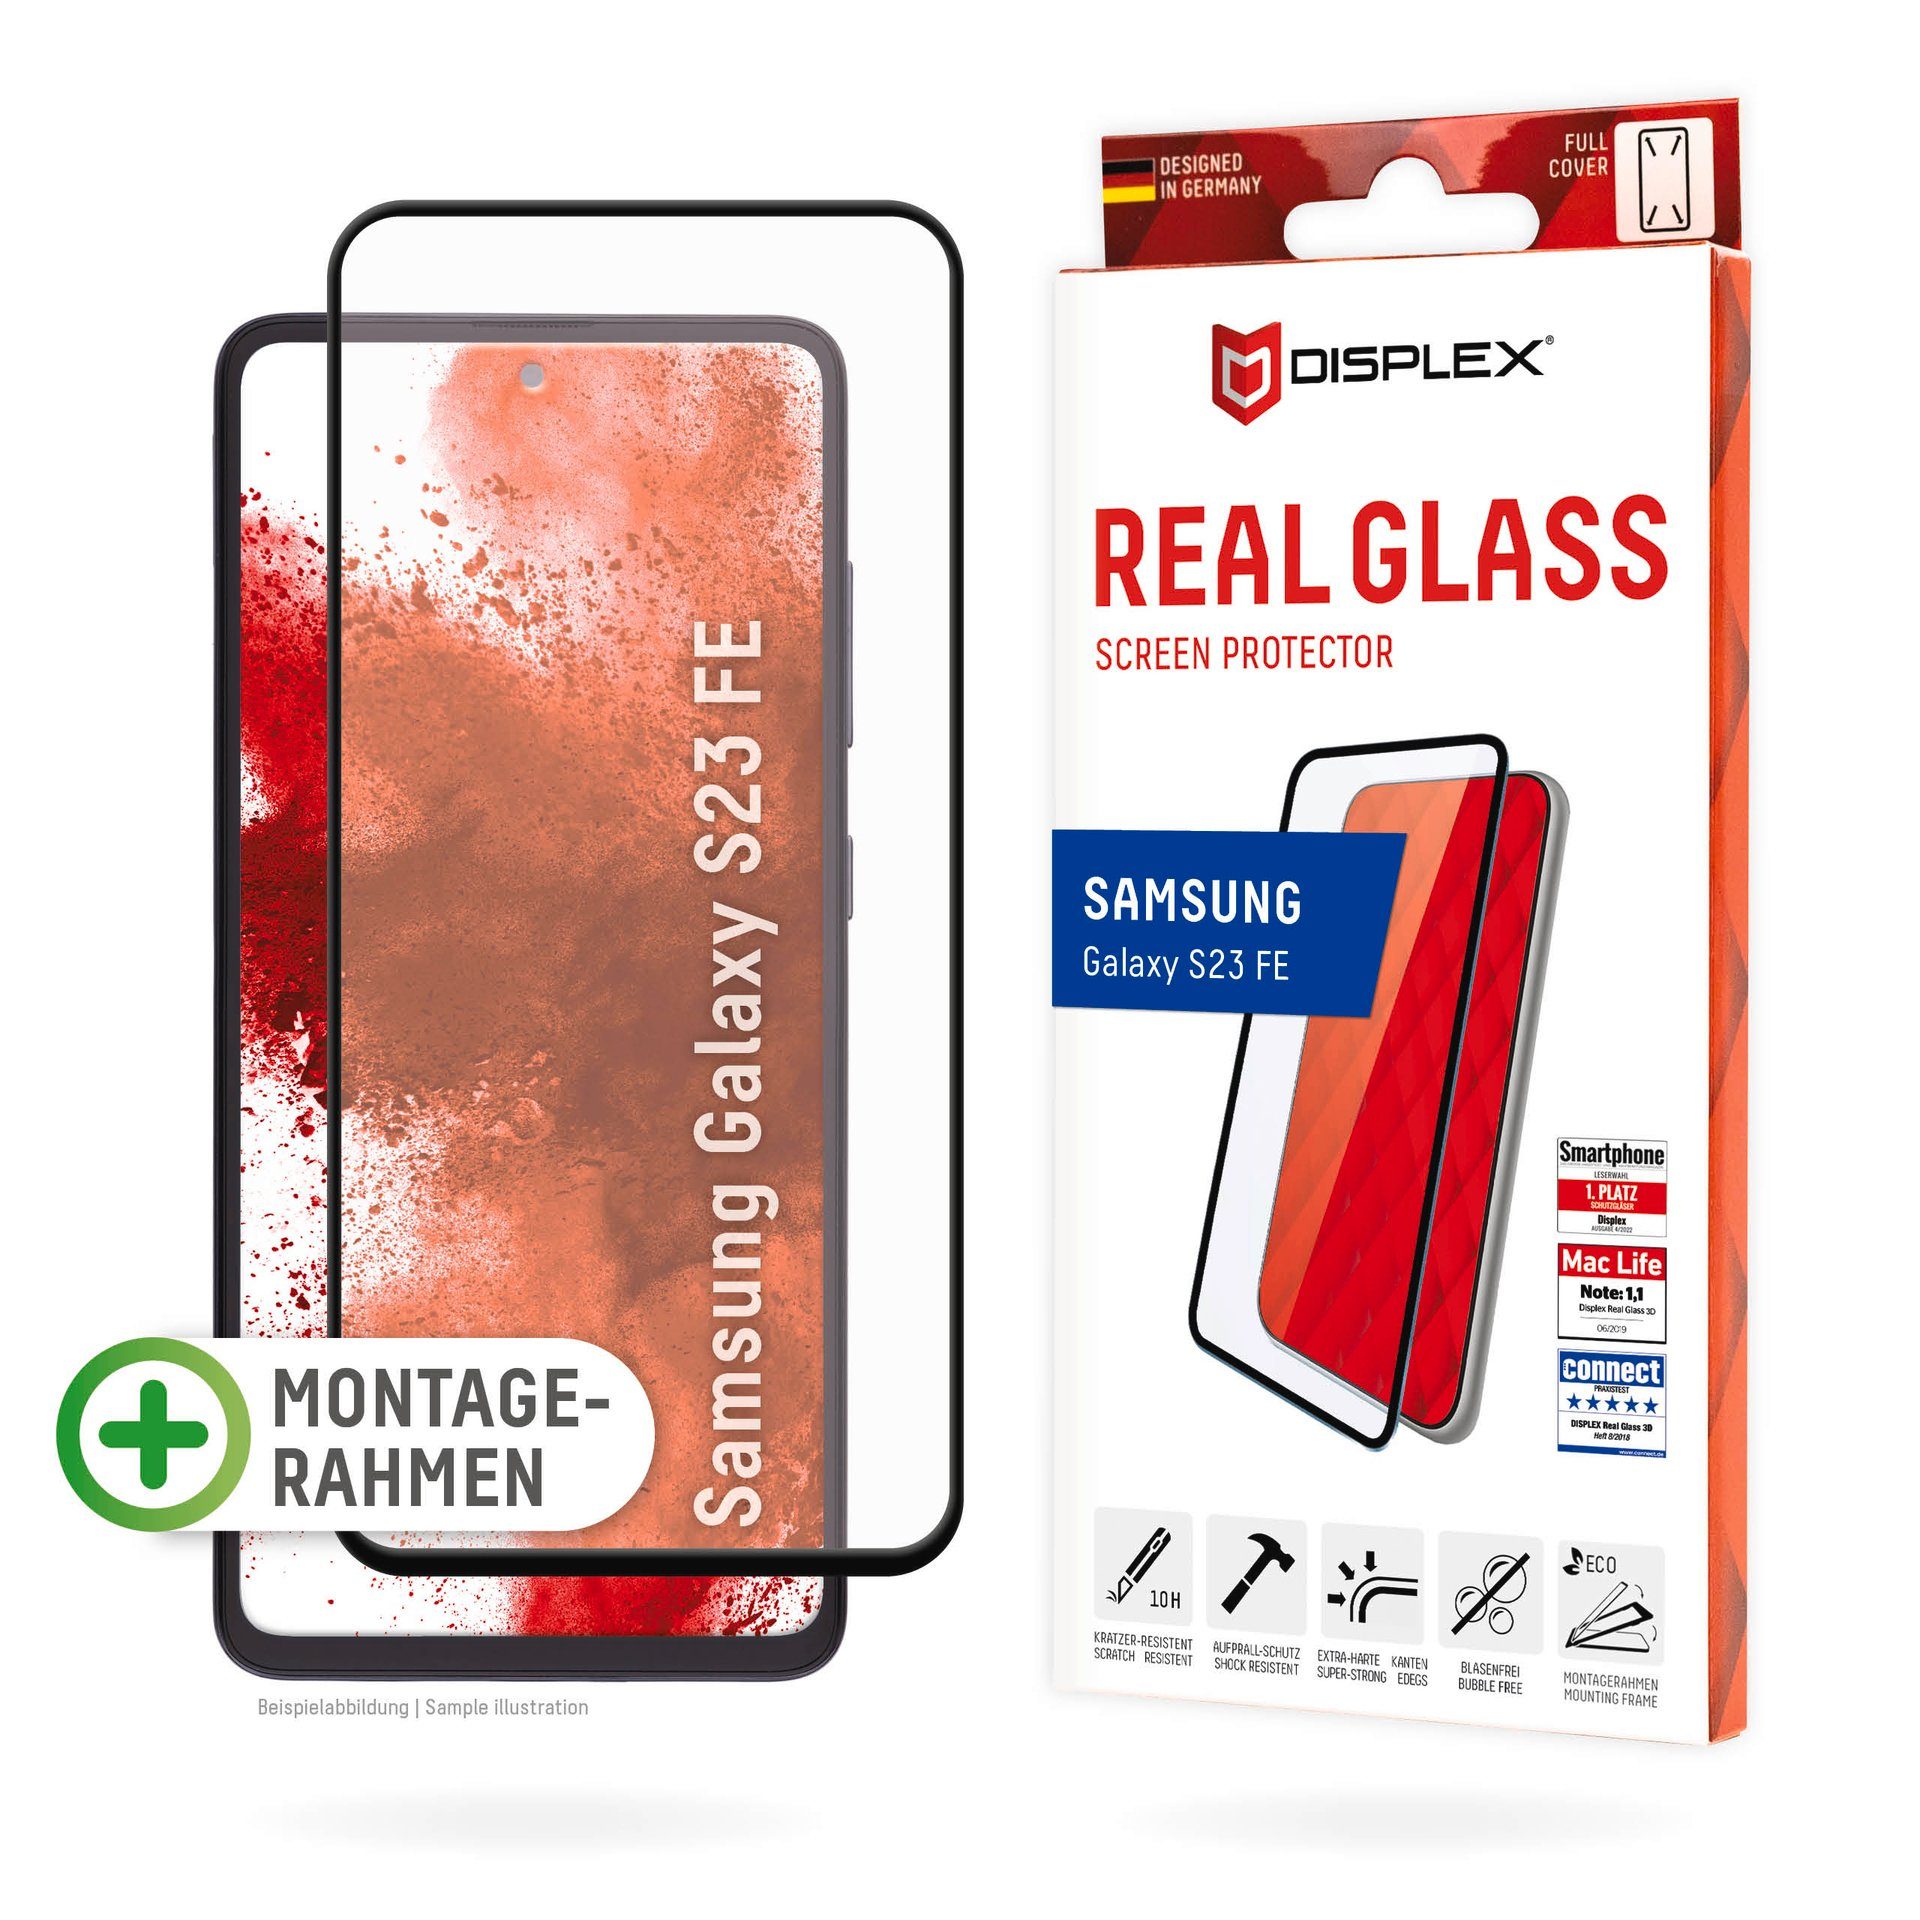 Displex Real Glass für Samsung Galaxy S23 FE, Displayschutzglas, Displayschutzfolie Displayschutz kratzer-resistent 10H splitterfest